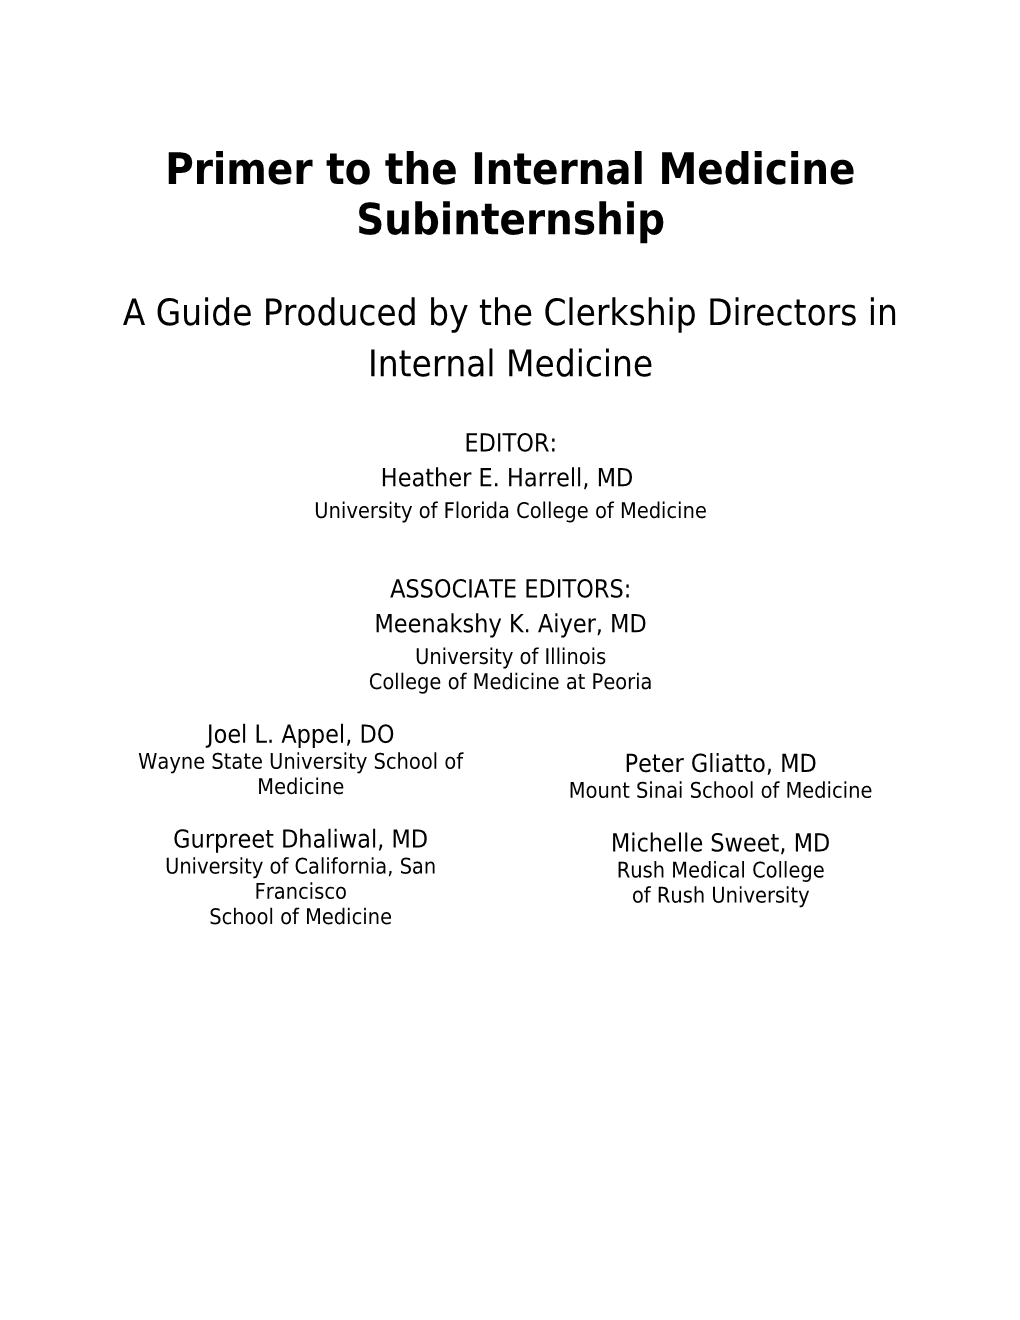 Primer to the Internal Medicine Subinternship